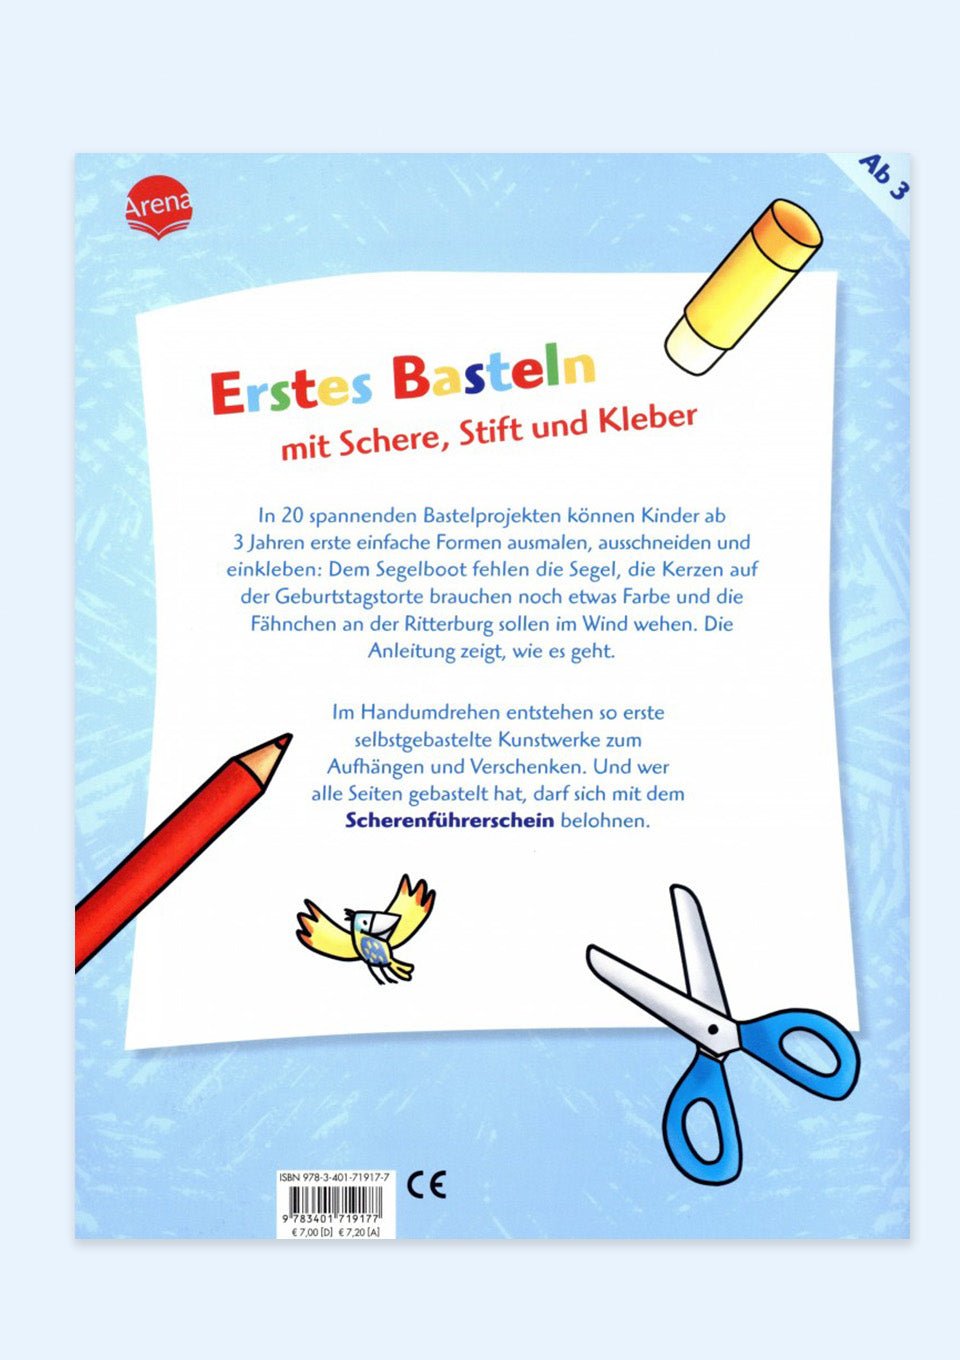 Arena Verlag Bastelbuch "Mein lustiger Bastelspaß" - tiny-boon.com